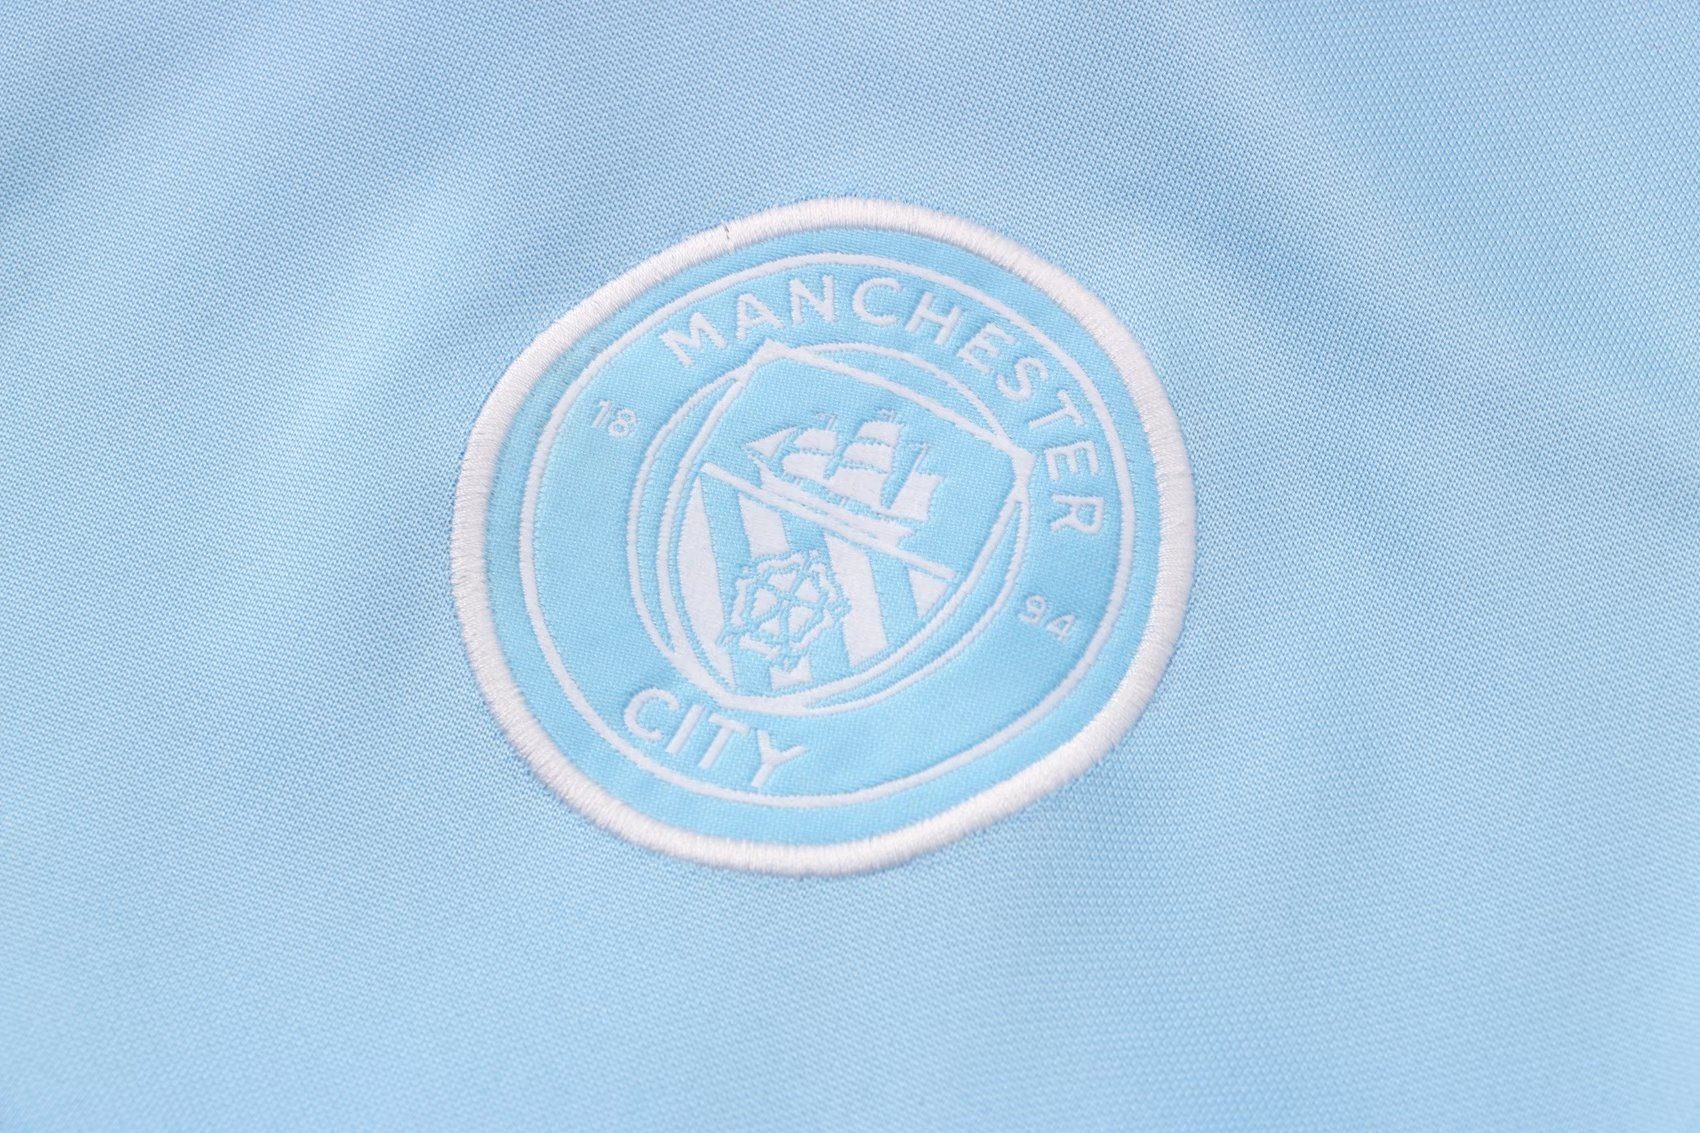 Manchester City Soccer Traning Suit (Jacket + Pants) Blue Mens 2021/22